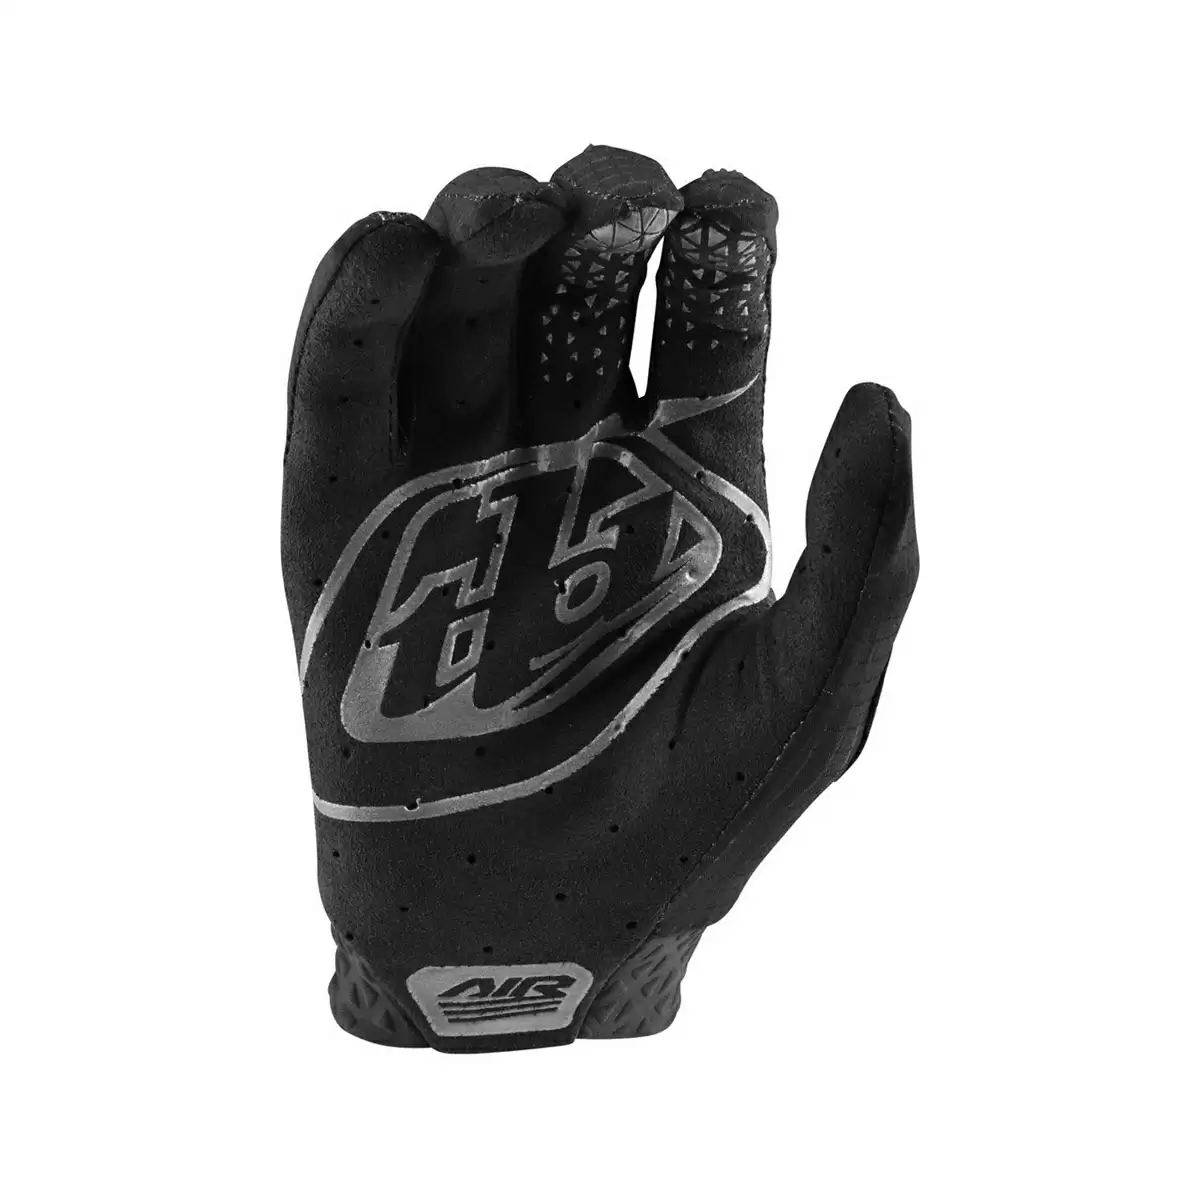 MTB-Handschuhe Air-Handschuhe schwarz Größe XXL #2